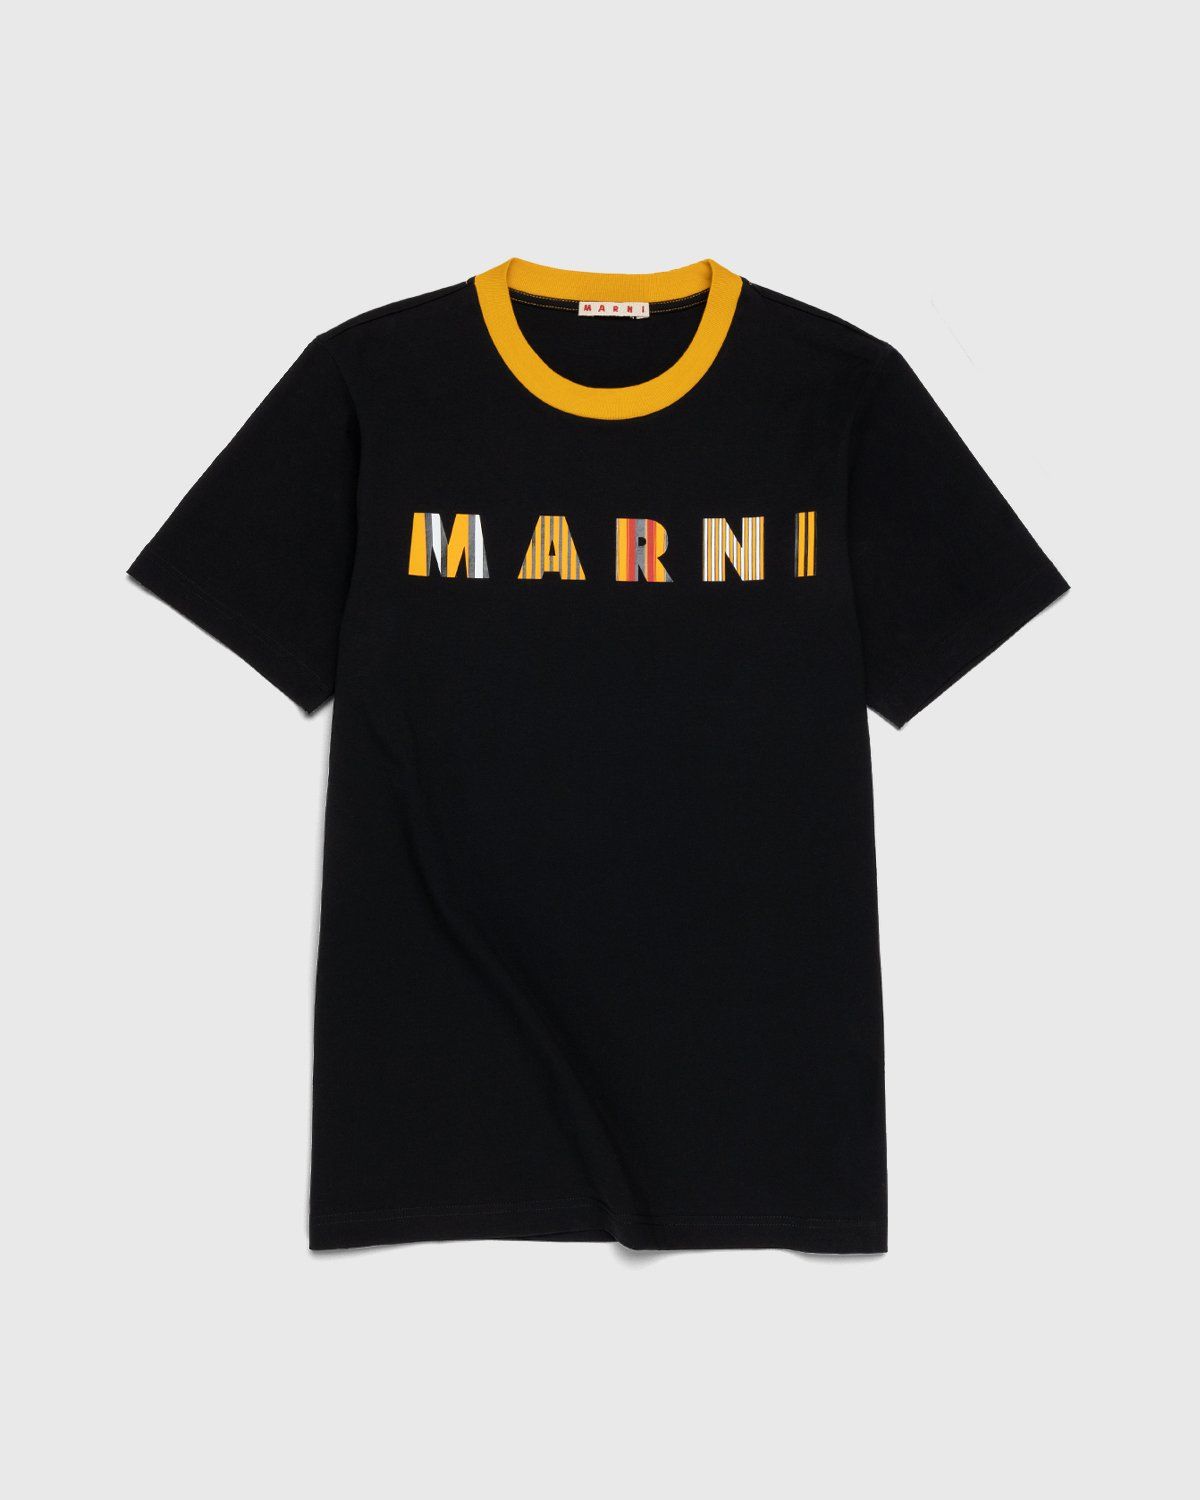 Marni – Stripe Logo Bio Jersey T-Shirt Black/Gold - T-Shirts - Yellow - Image 1